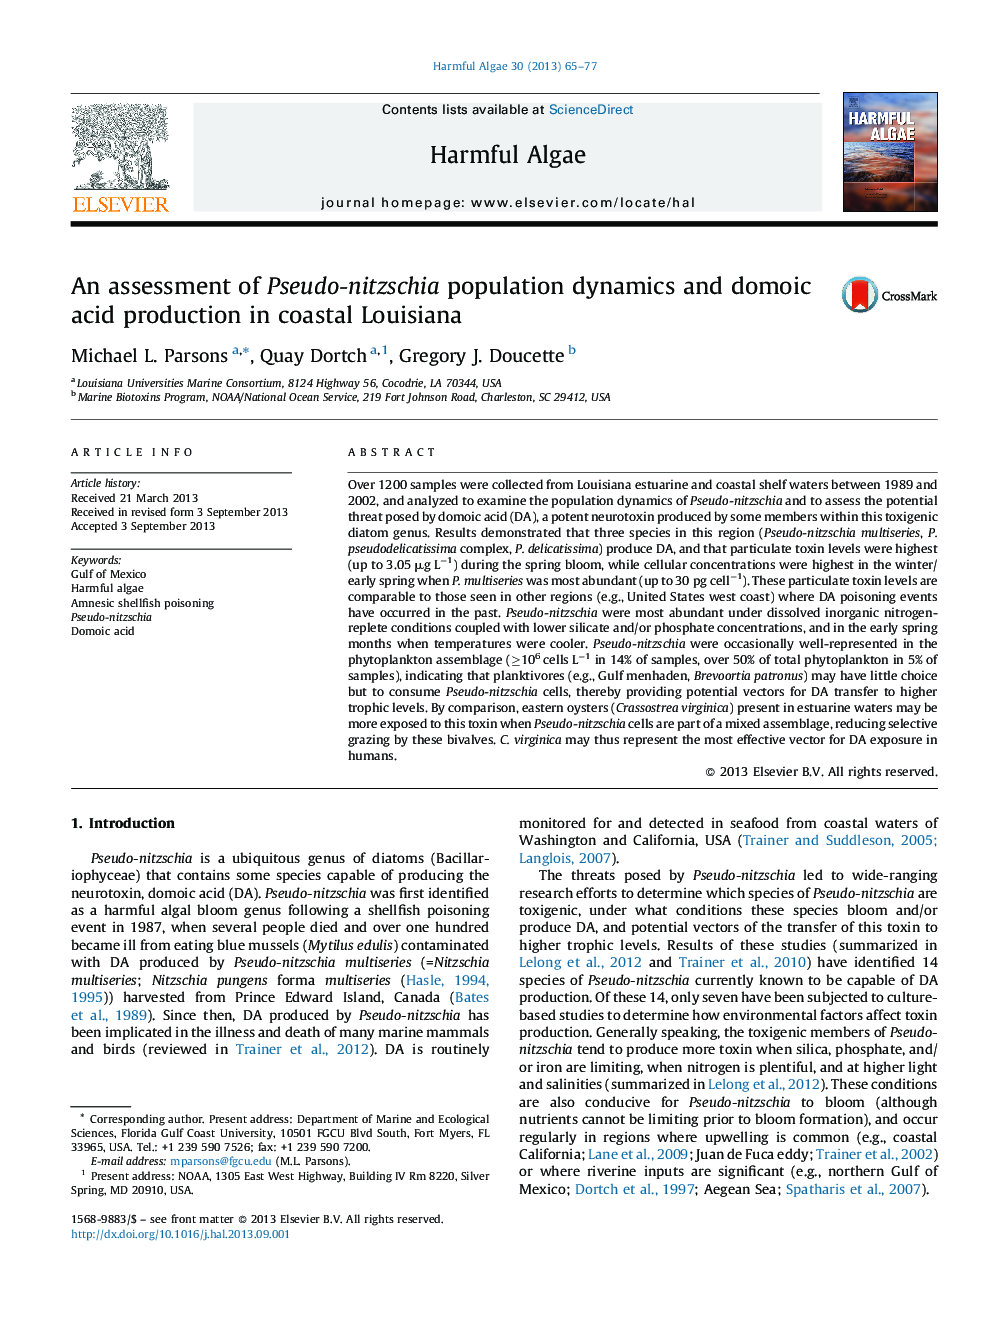 An assessment of Pseudo-nitzschia population dynamics and domoic acid production in coastal Louisiana